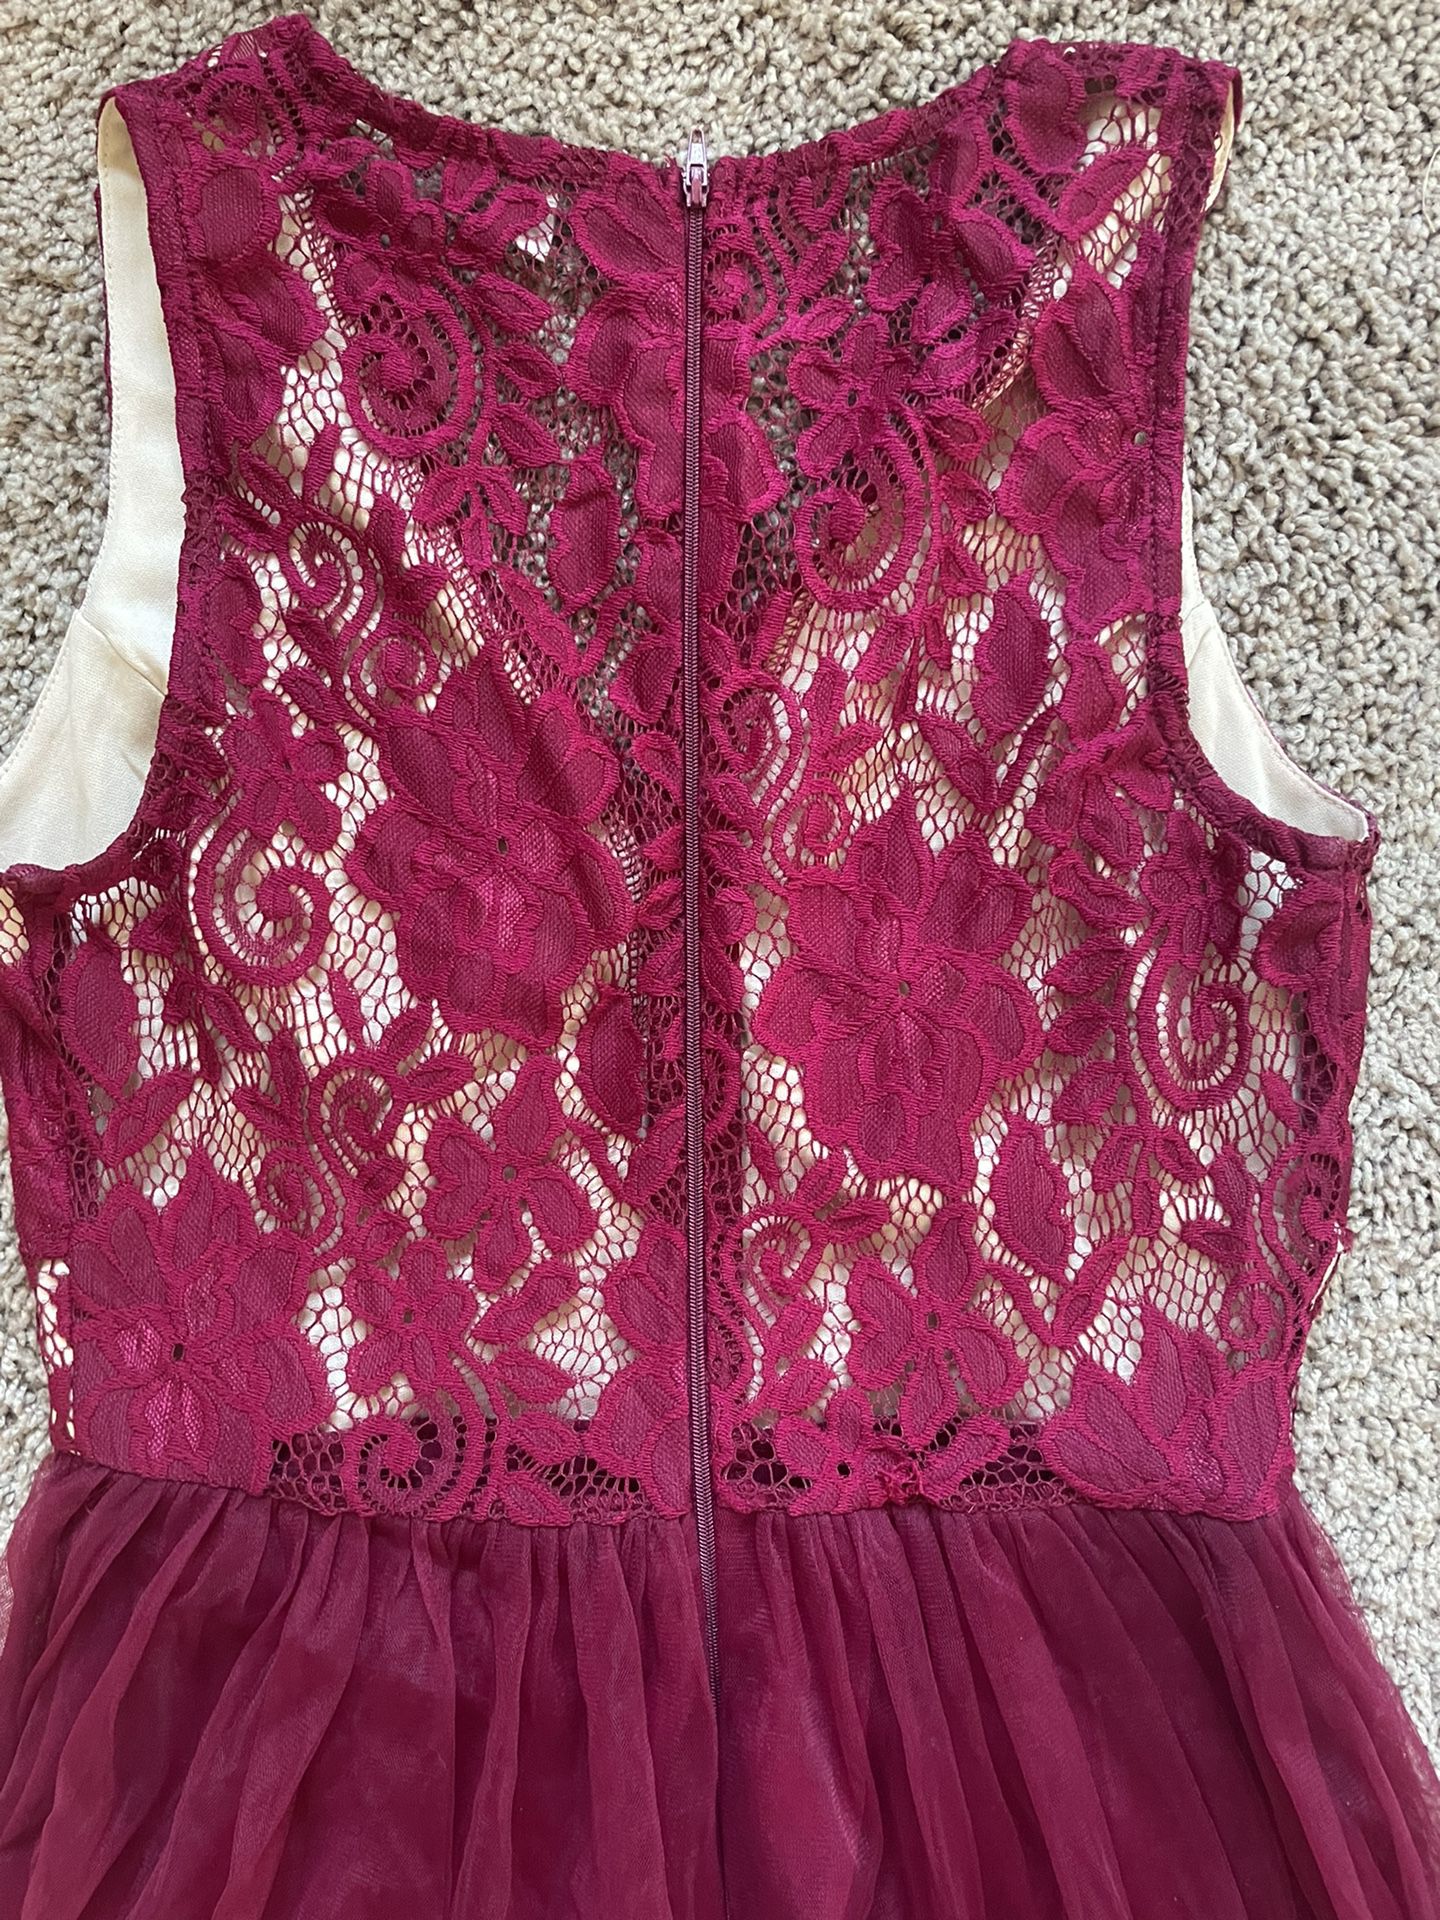 Charlotte Russe Nude & Burgundy Dress